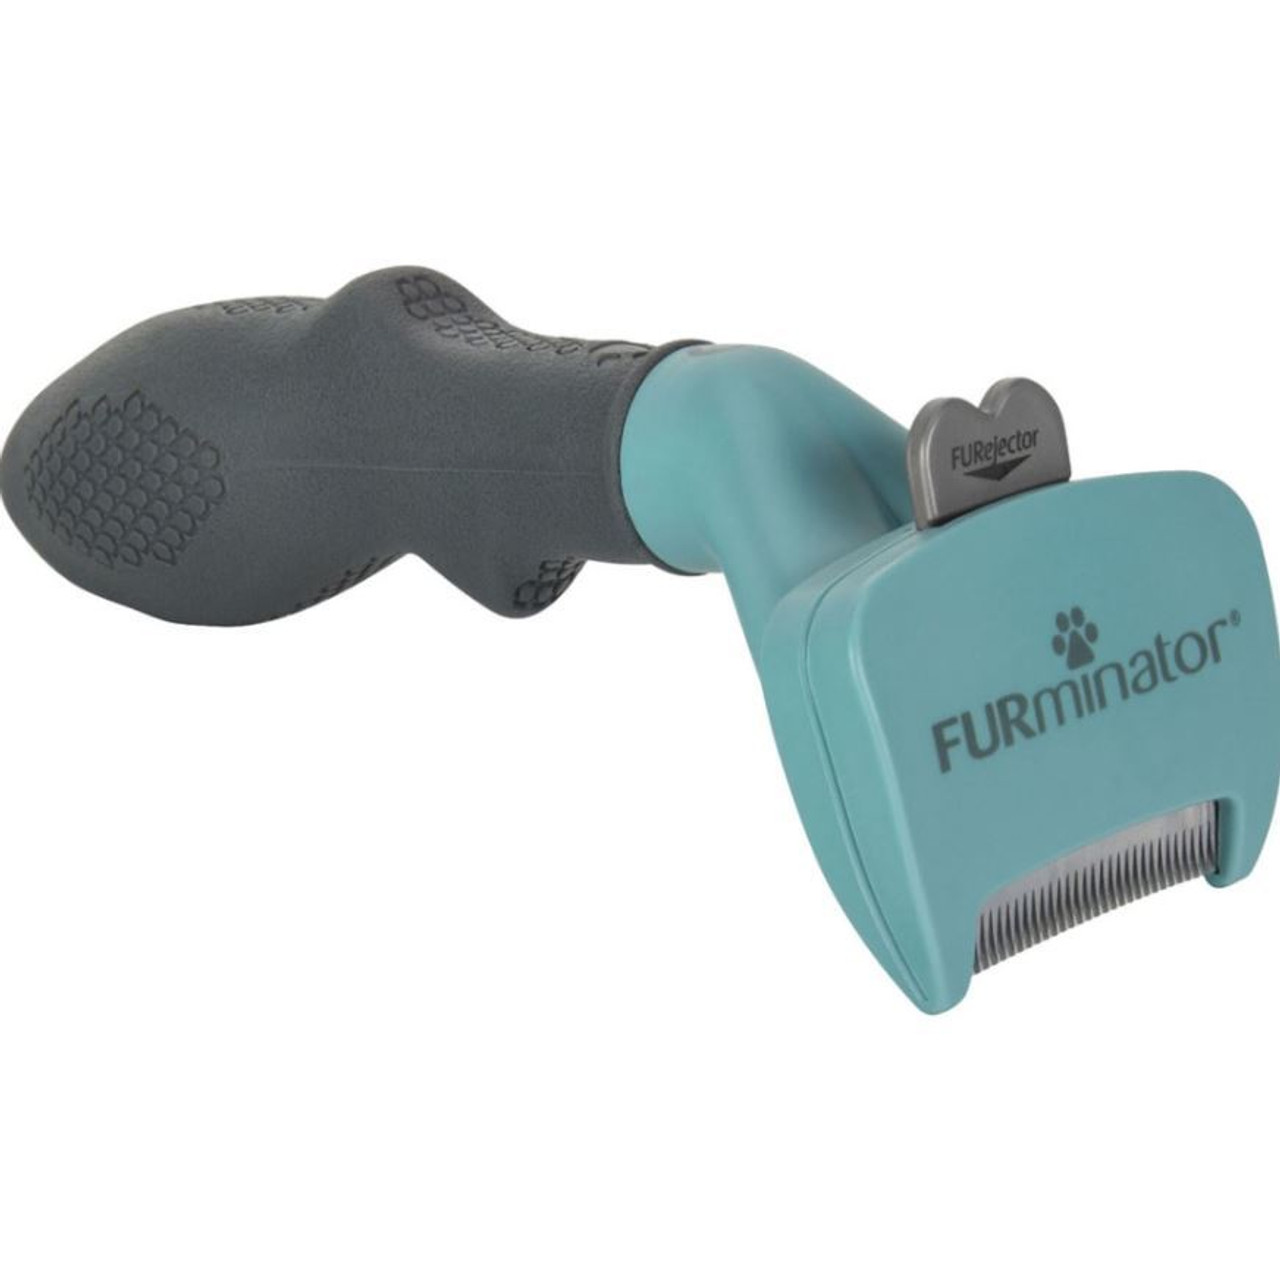 furminator personal hair collection tool